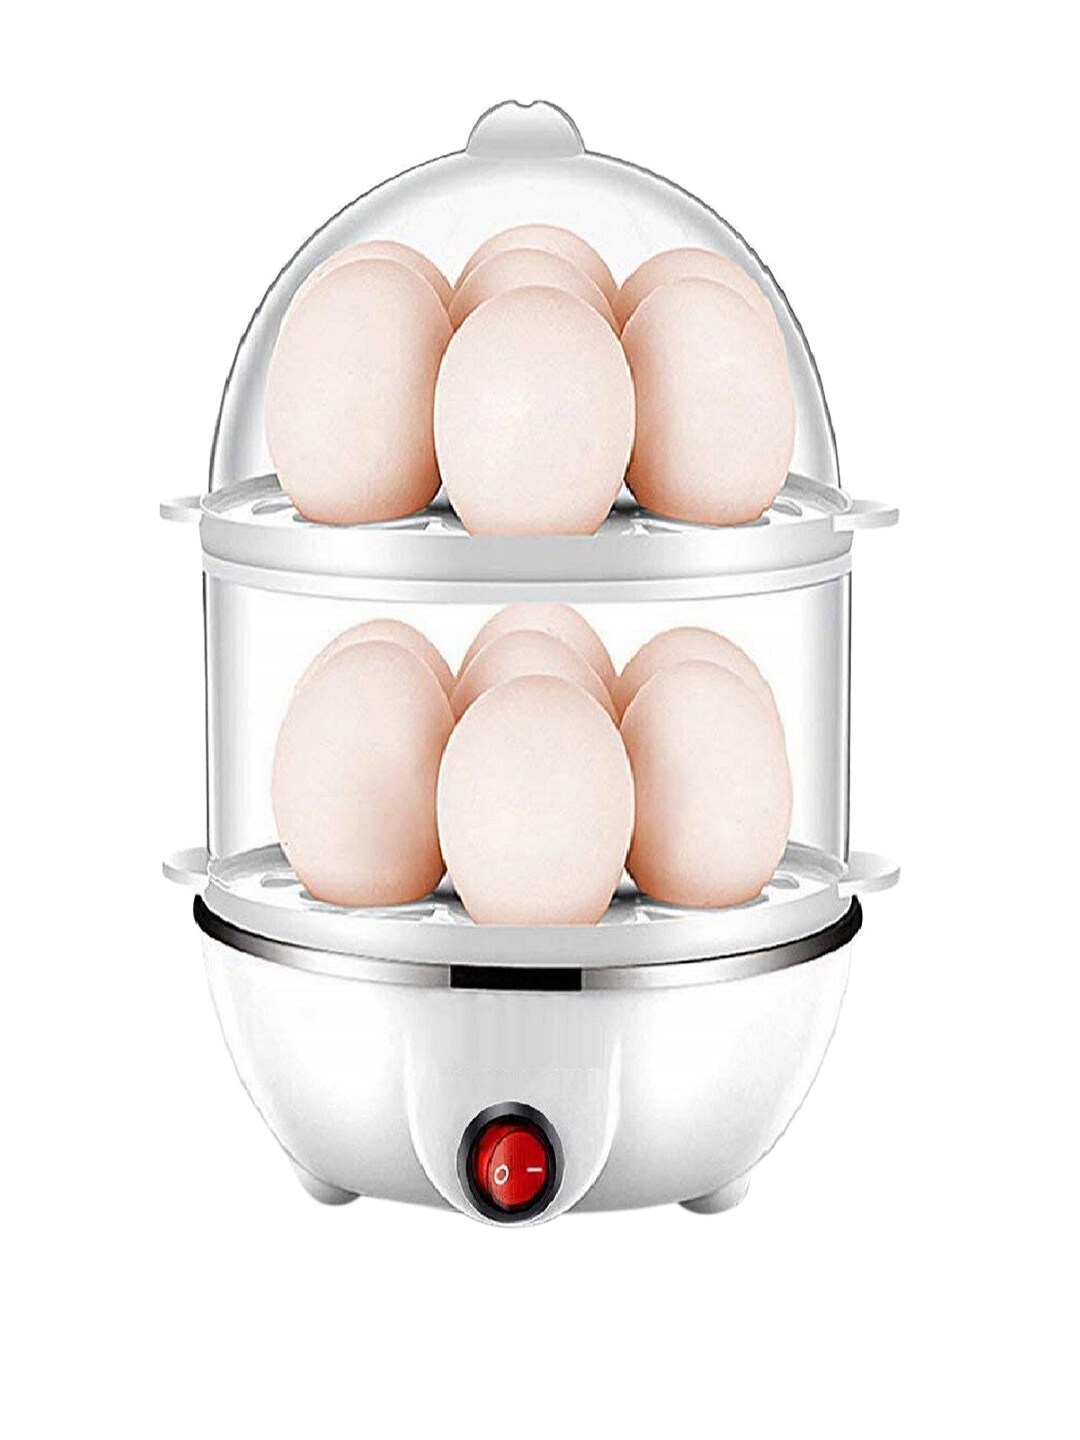 Tormeti 14 Eggs Capacity Double Layered Egg Boiler Price in India